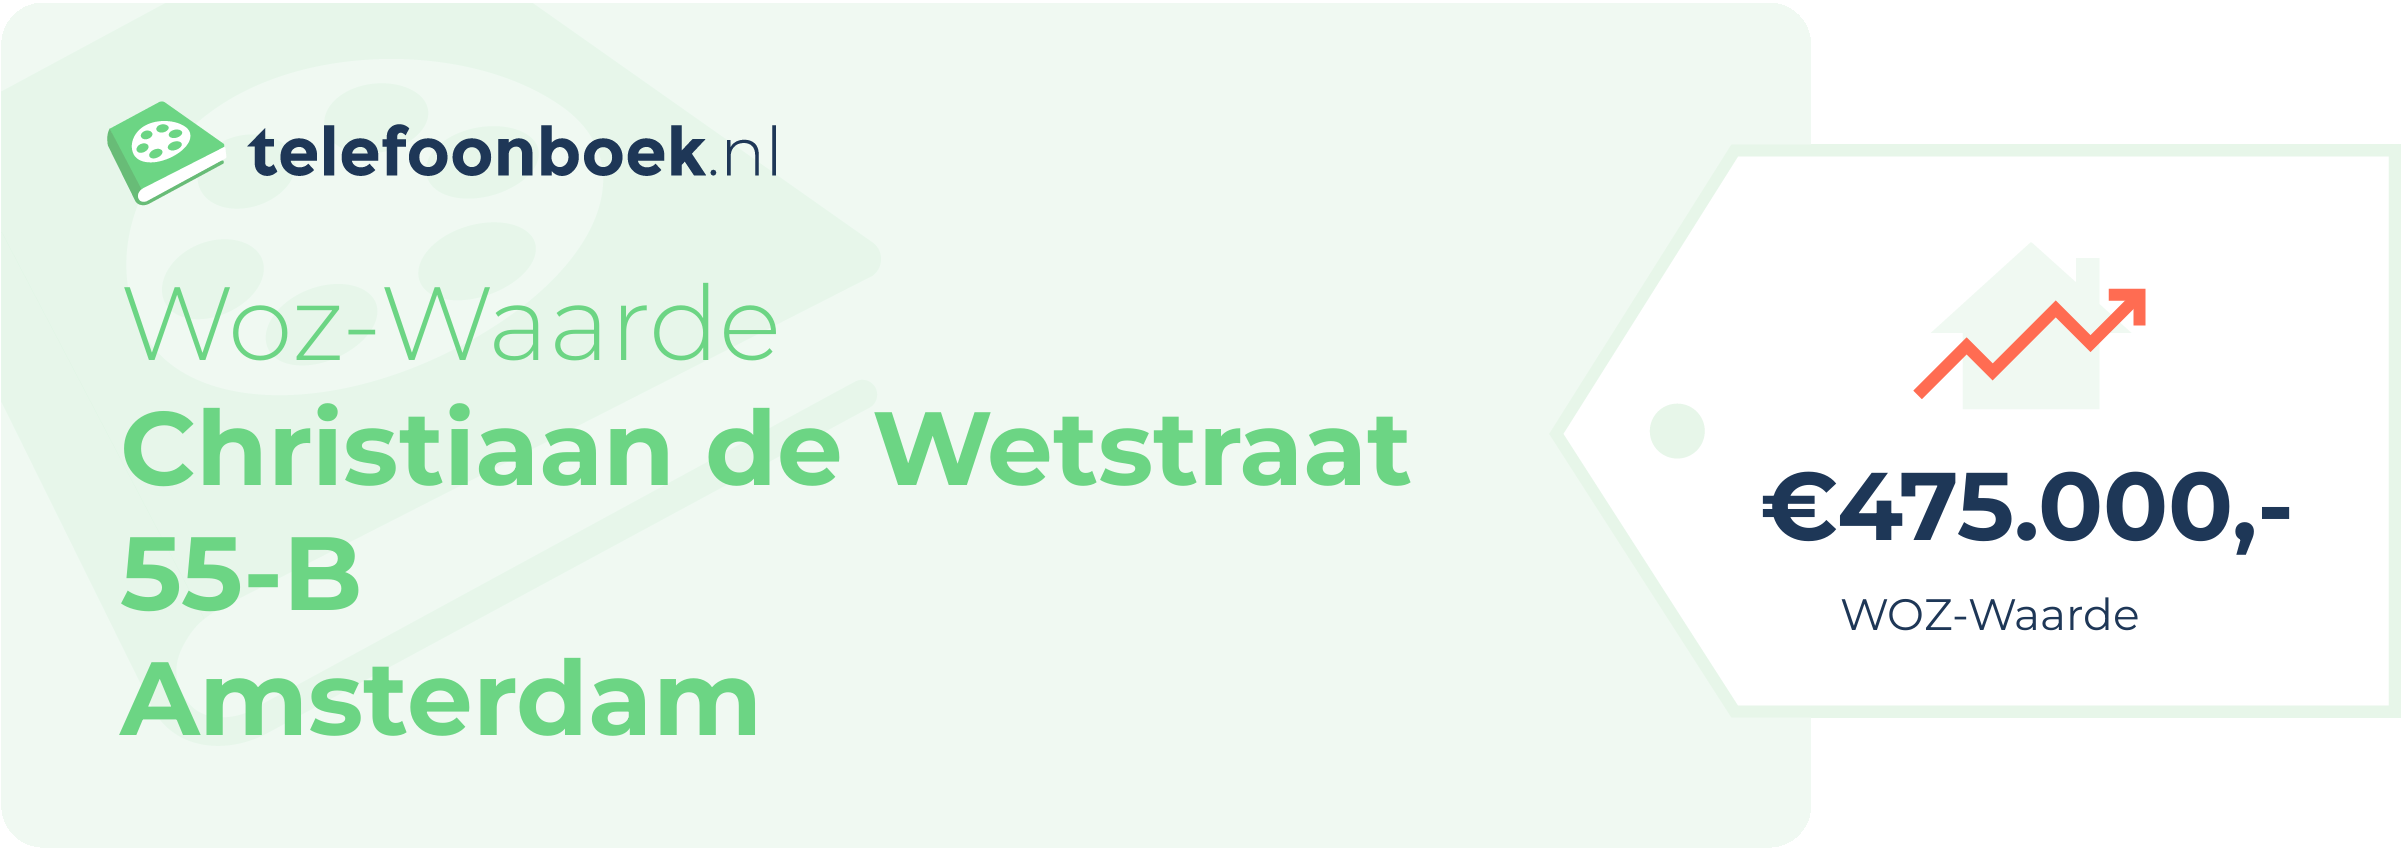 WOZ-waarde Christiaan De Wetstraat 55-B Amsterdam